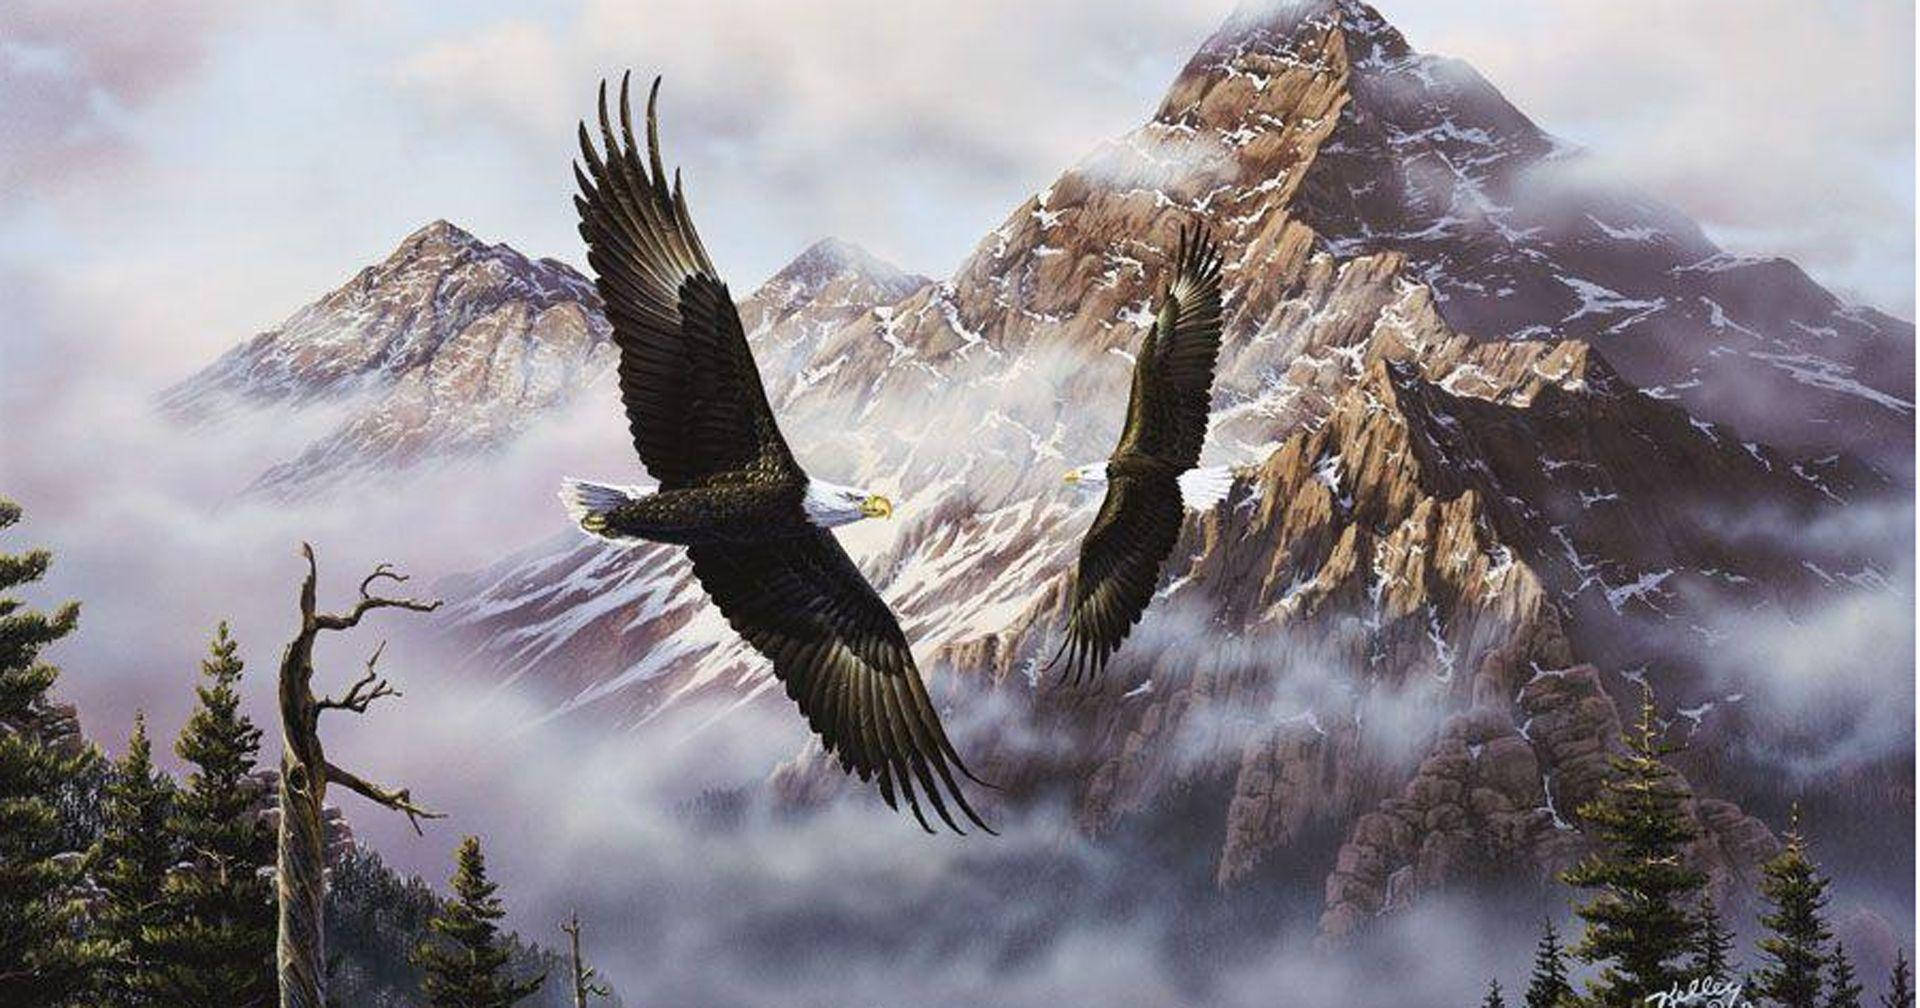 Us Eagle Over Mountains